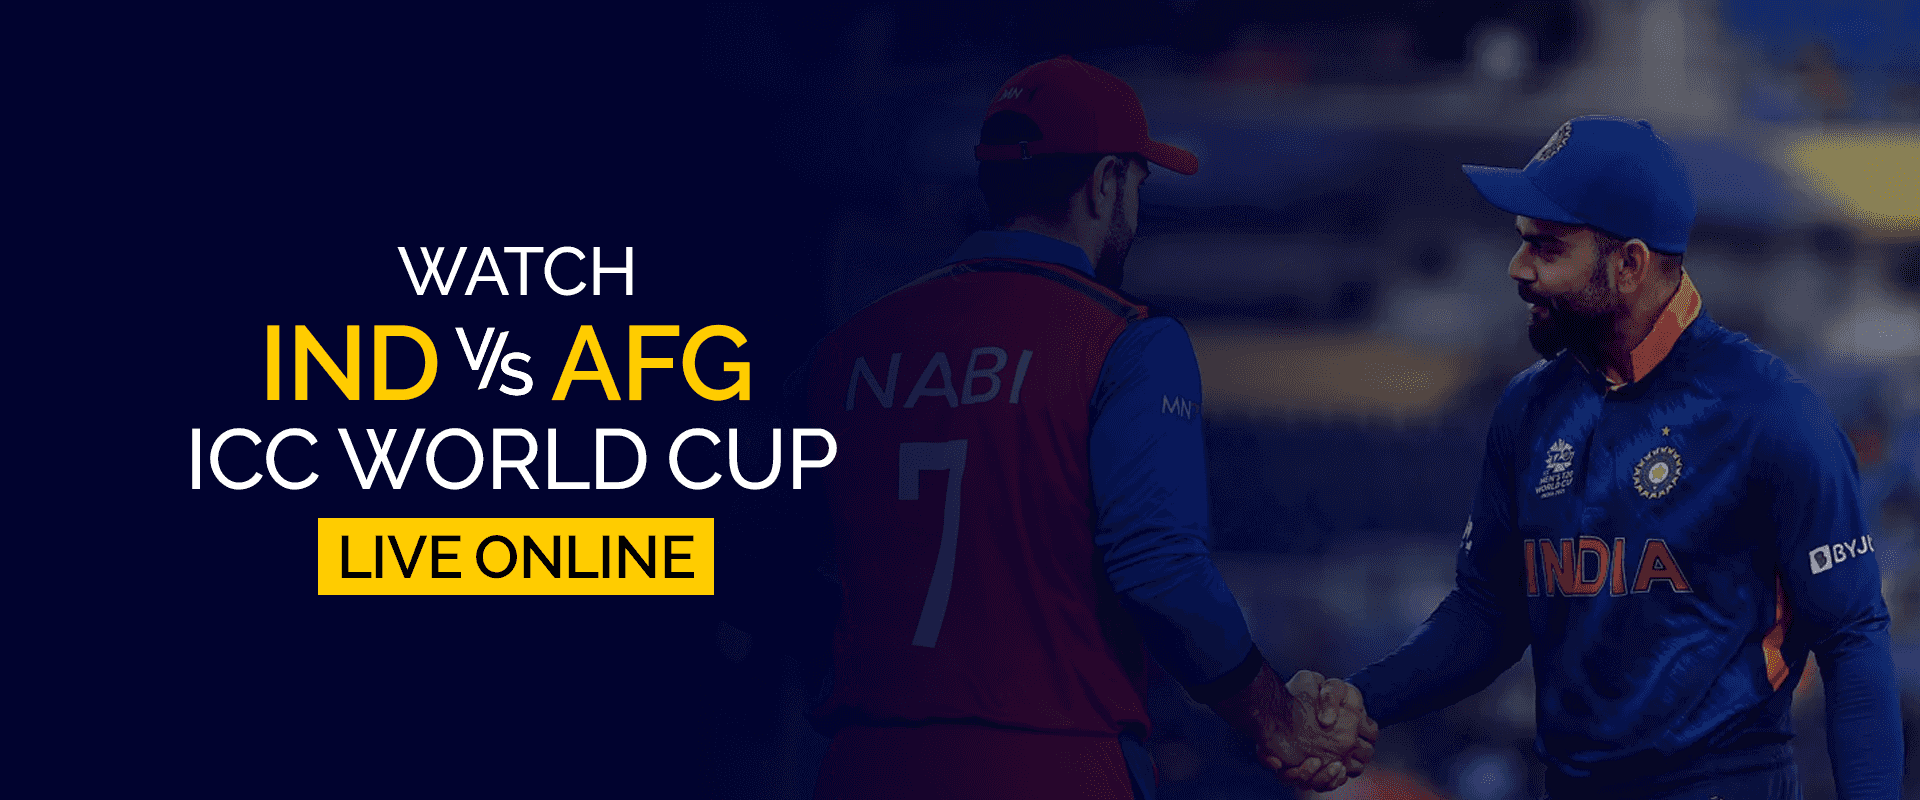 Watch IND vs AFG ICC World Cup Live Online